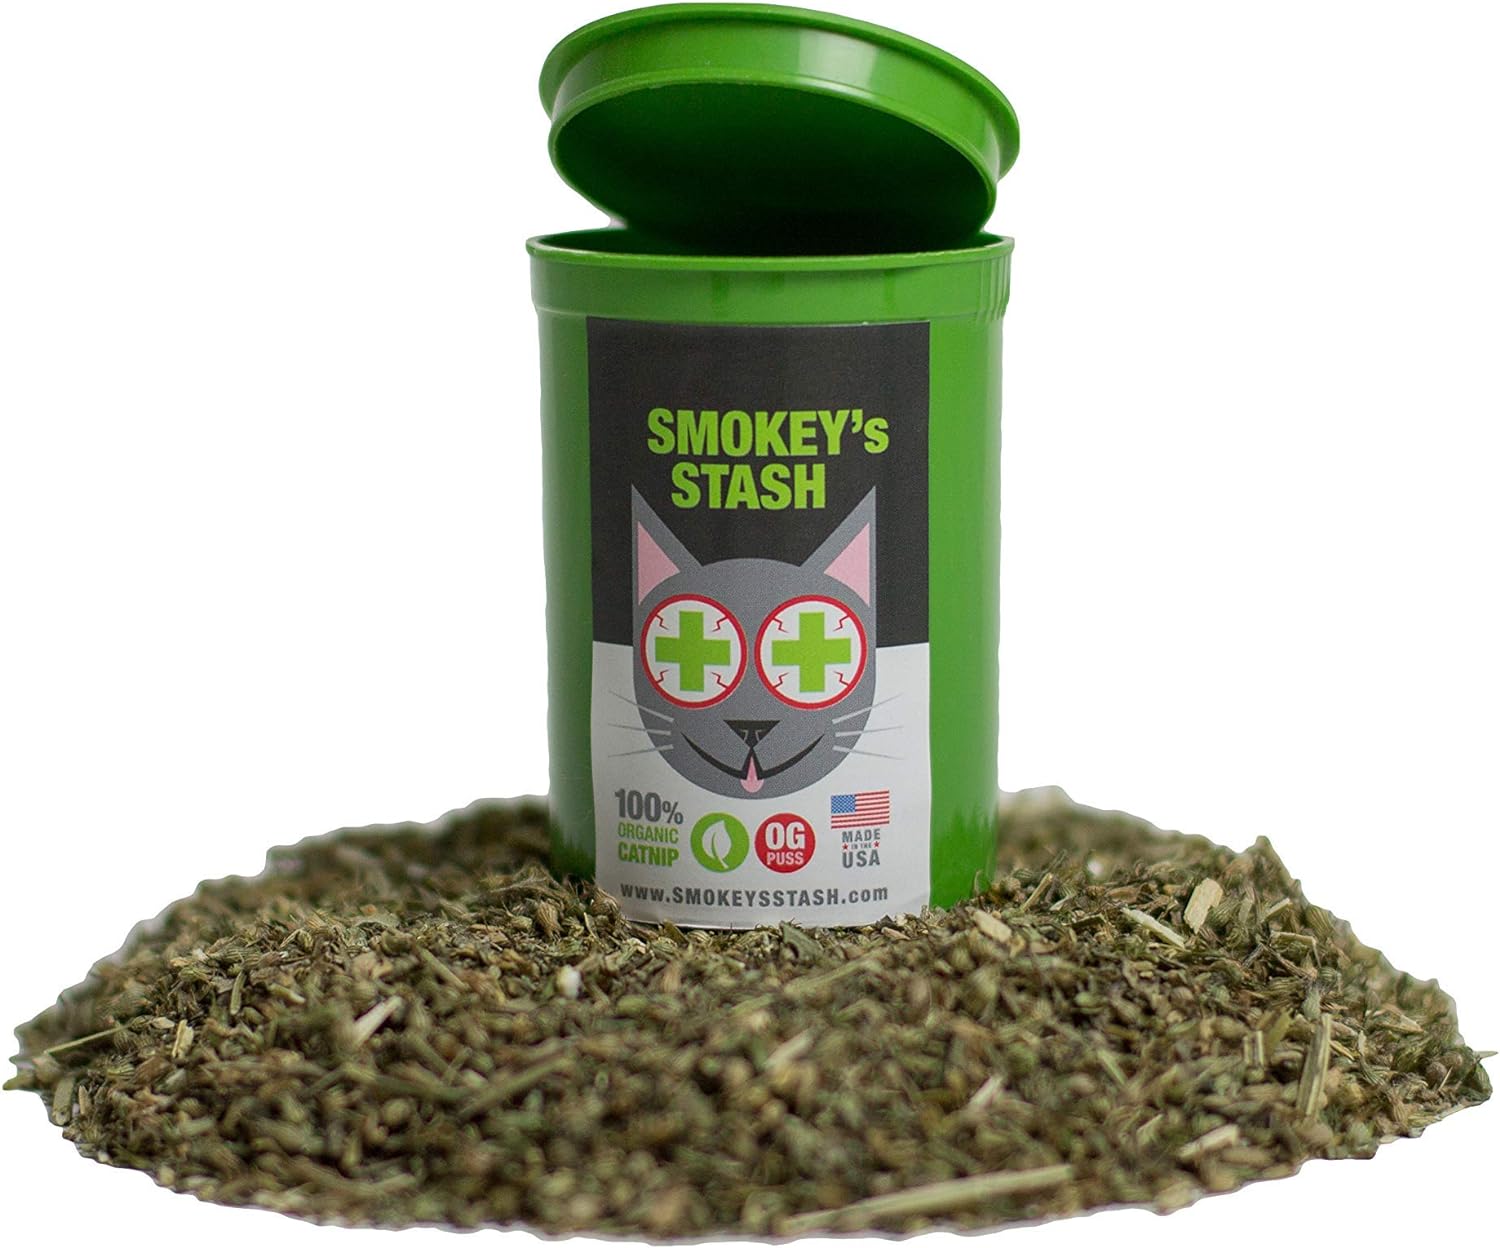 Smokey's Stash Organic Catnip OG puss Potent cat nip for Cats Small pop top : Pet Supplies